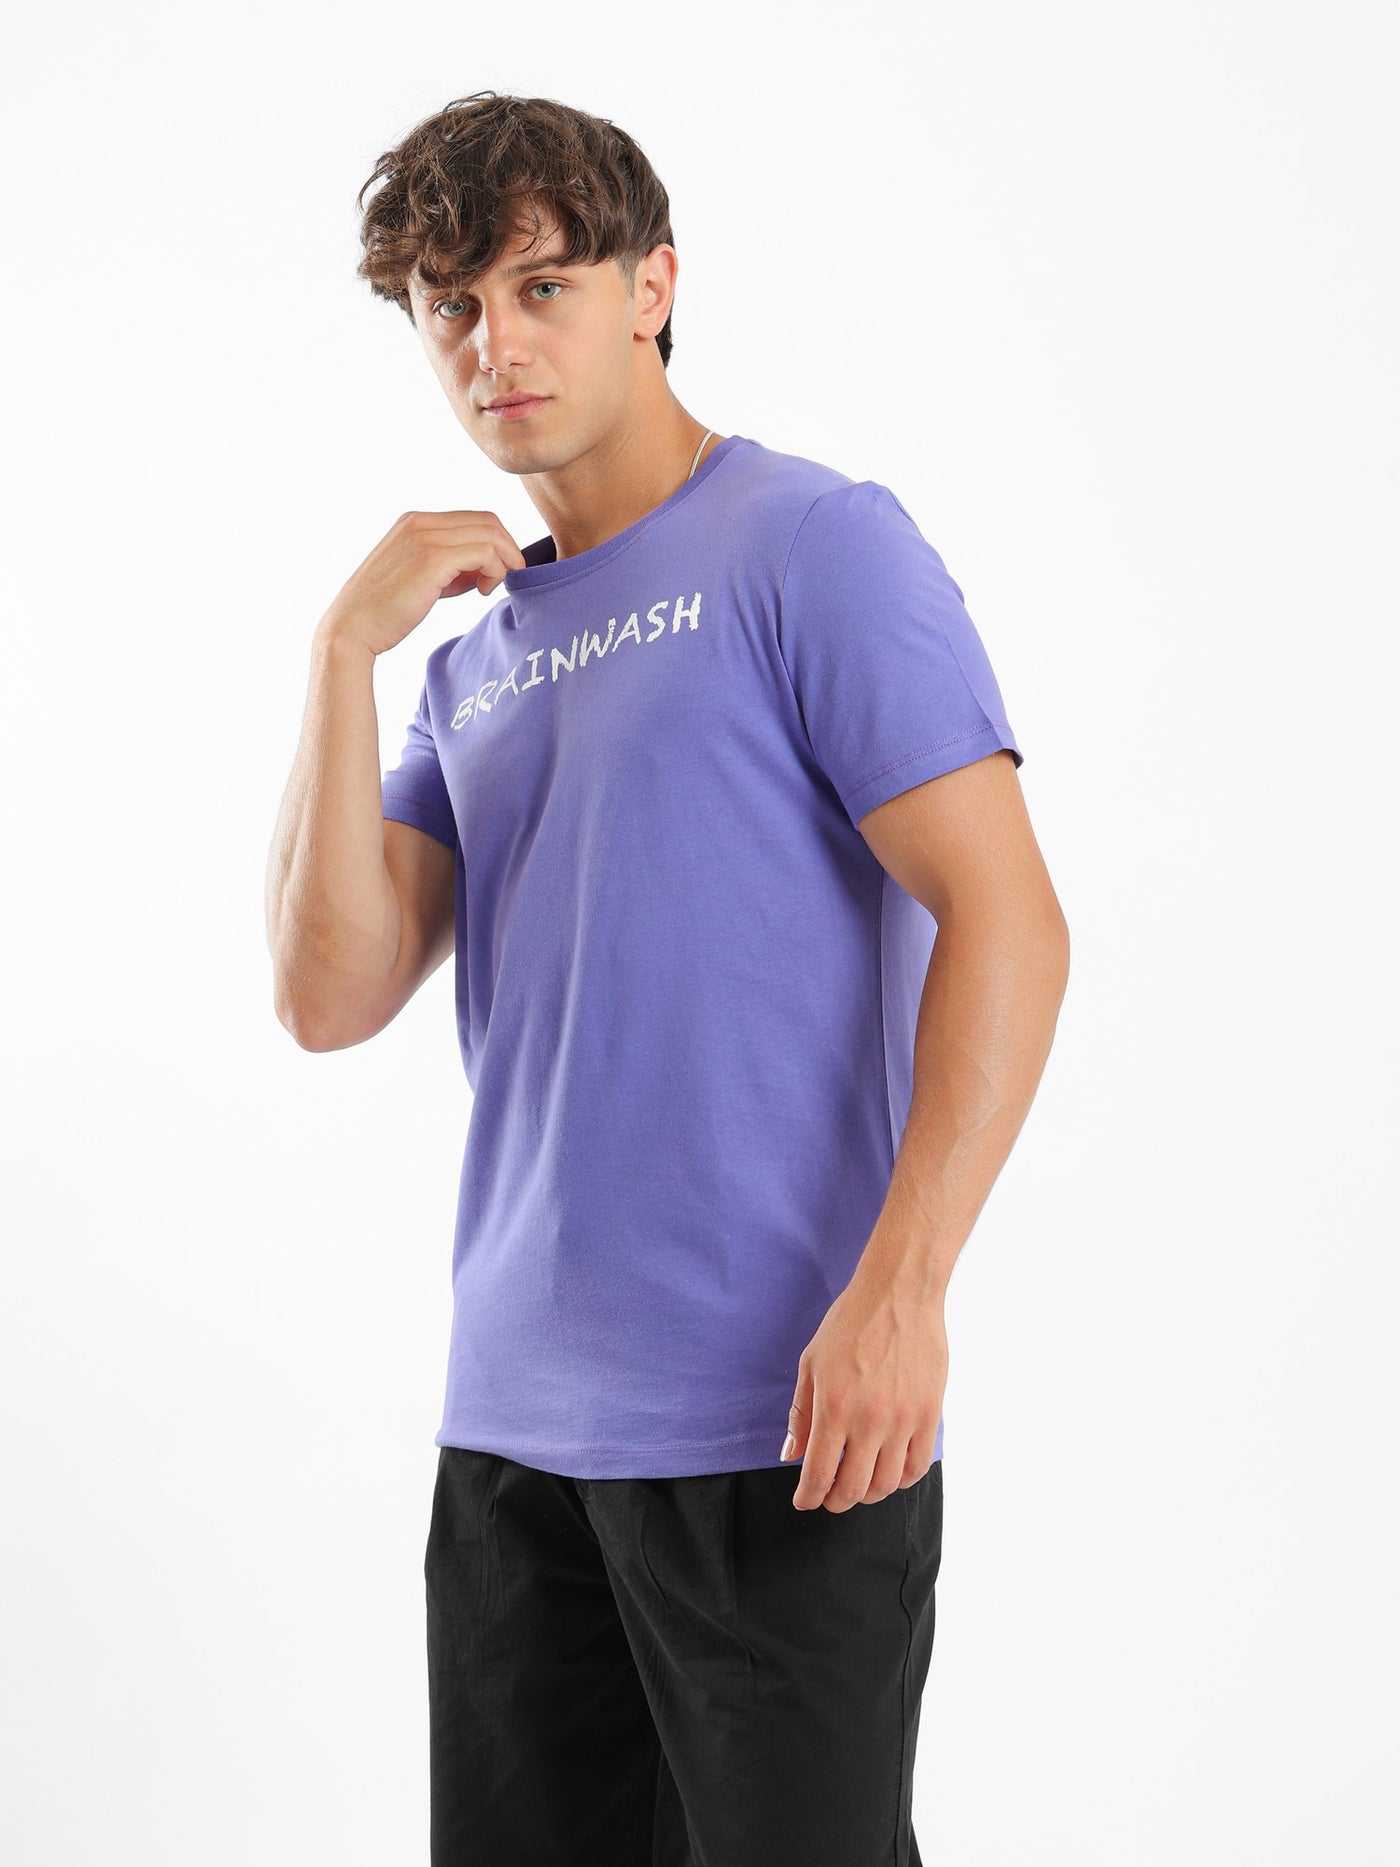 T-Shirt - Half Sleeves - Crew Neck - "Brainwash" Front Text Print